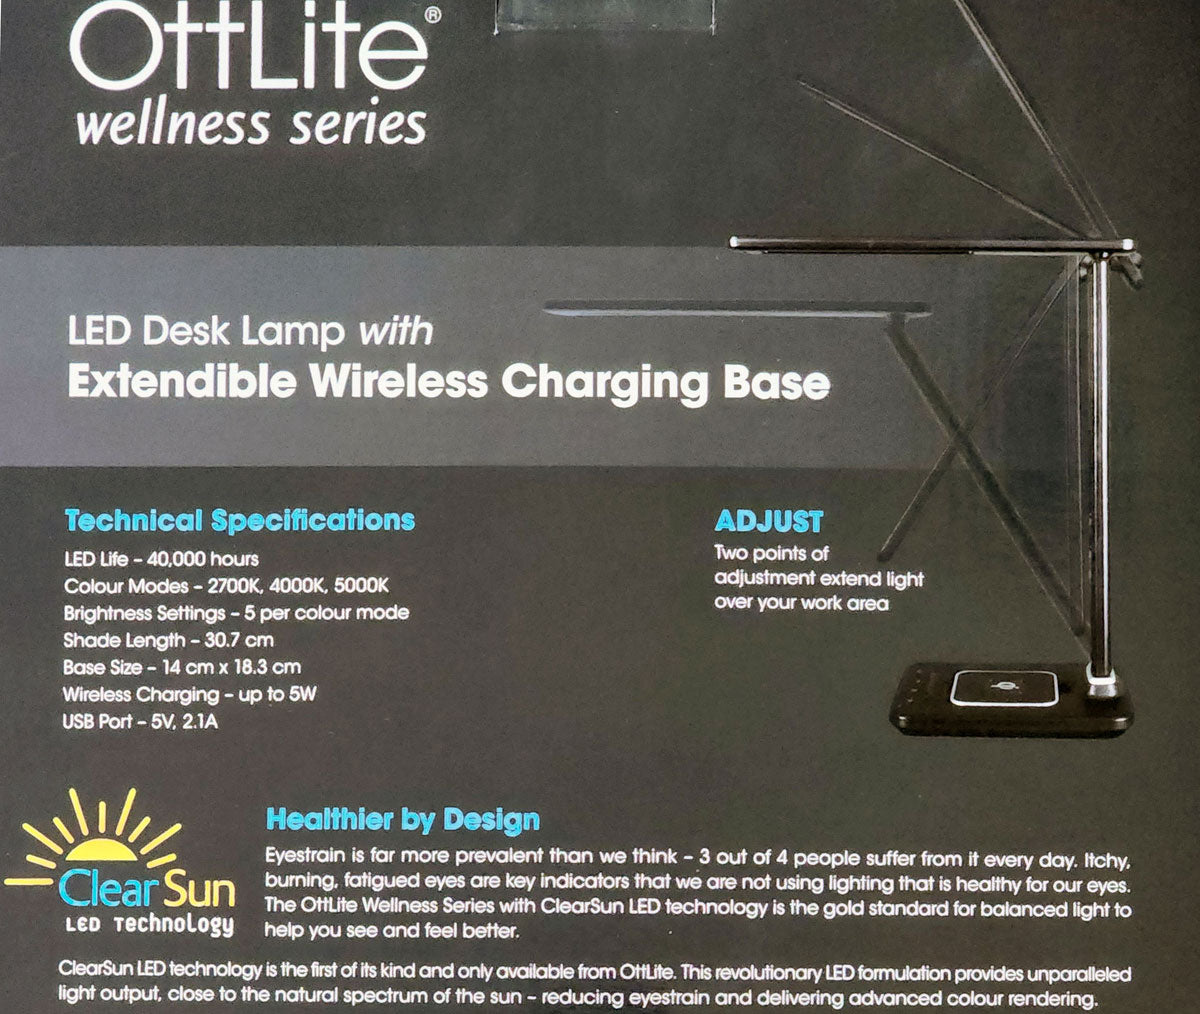 OttLite LED Desk Lamp with Extendible Wireless Charging Base